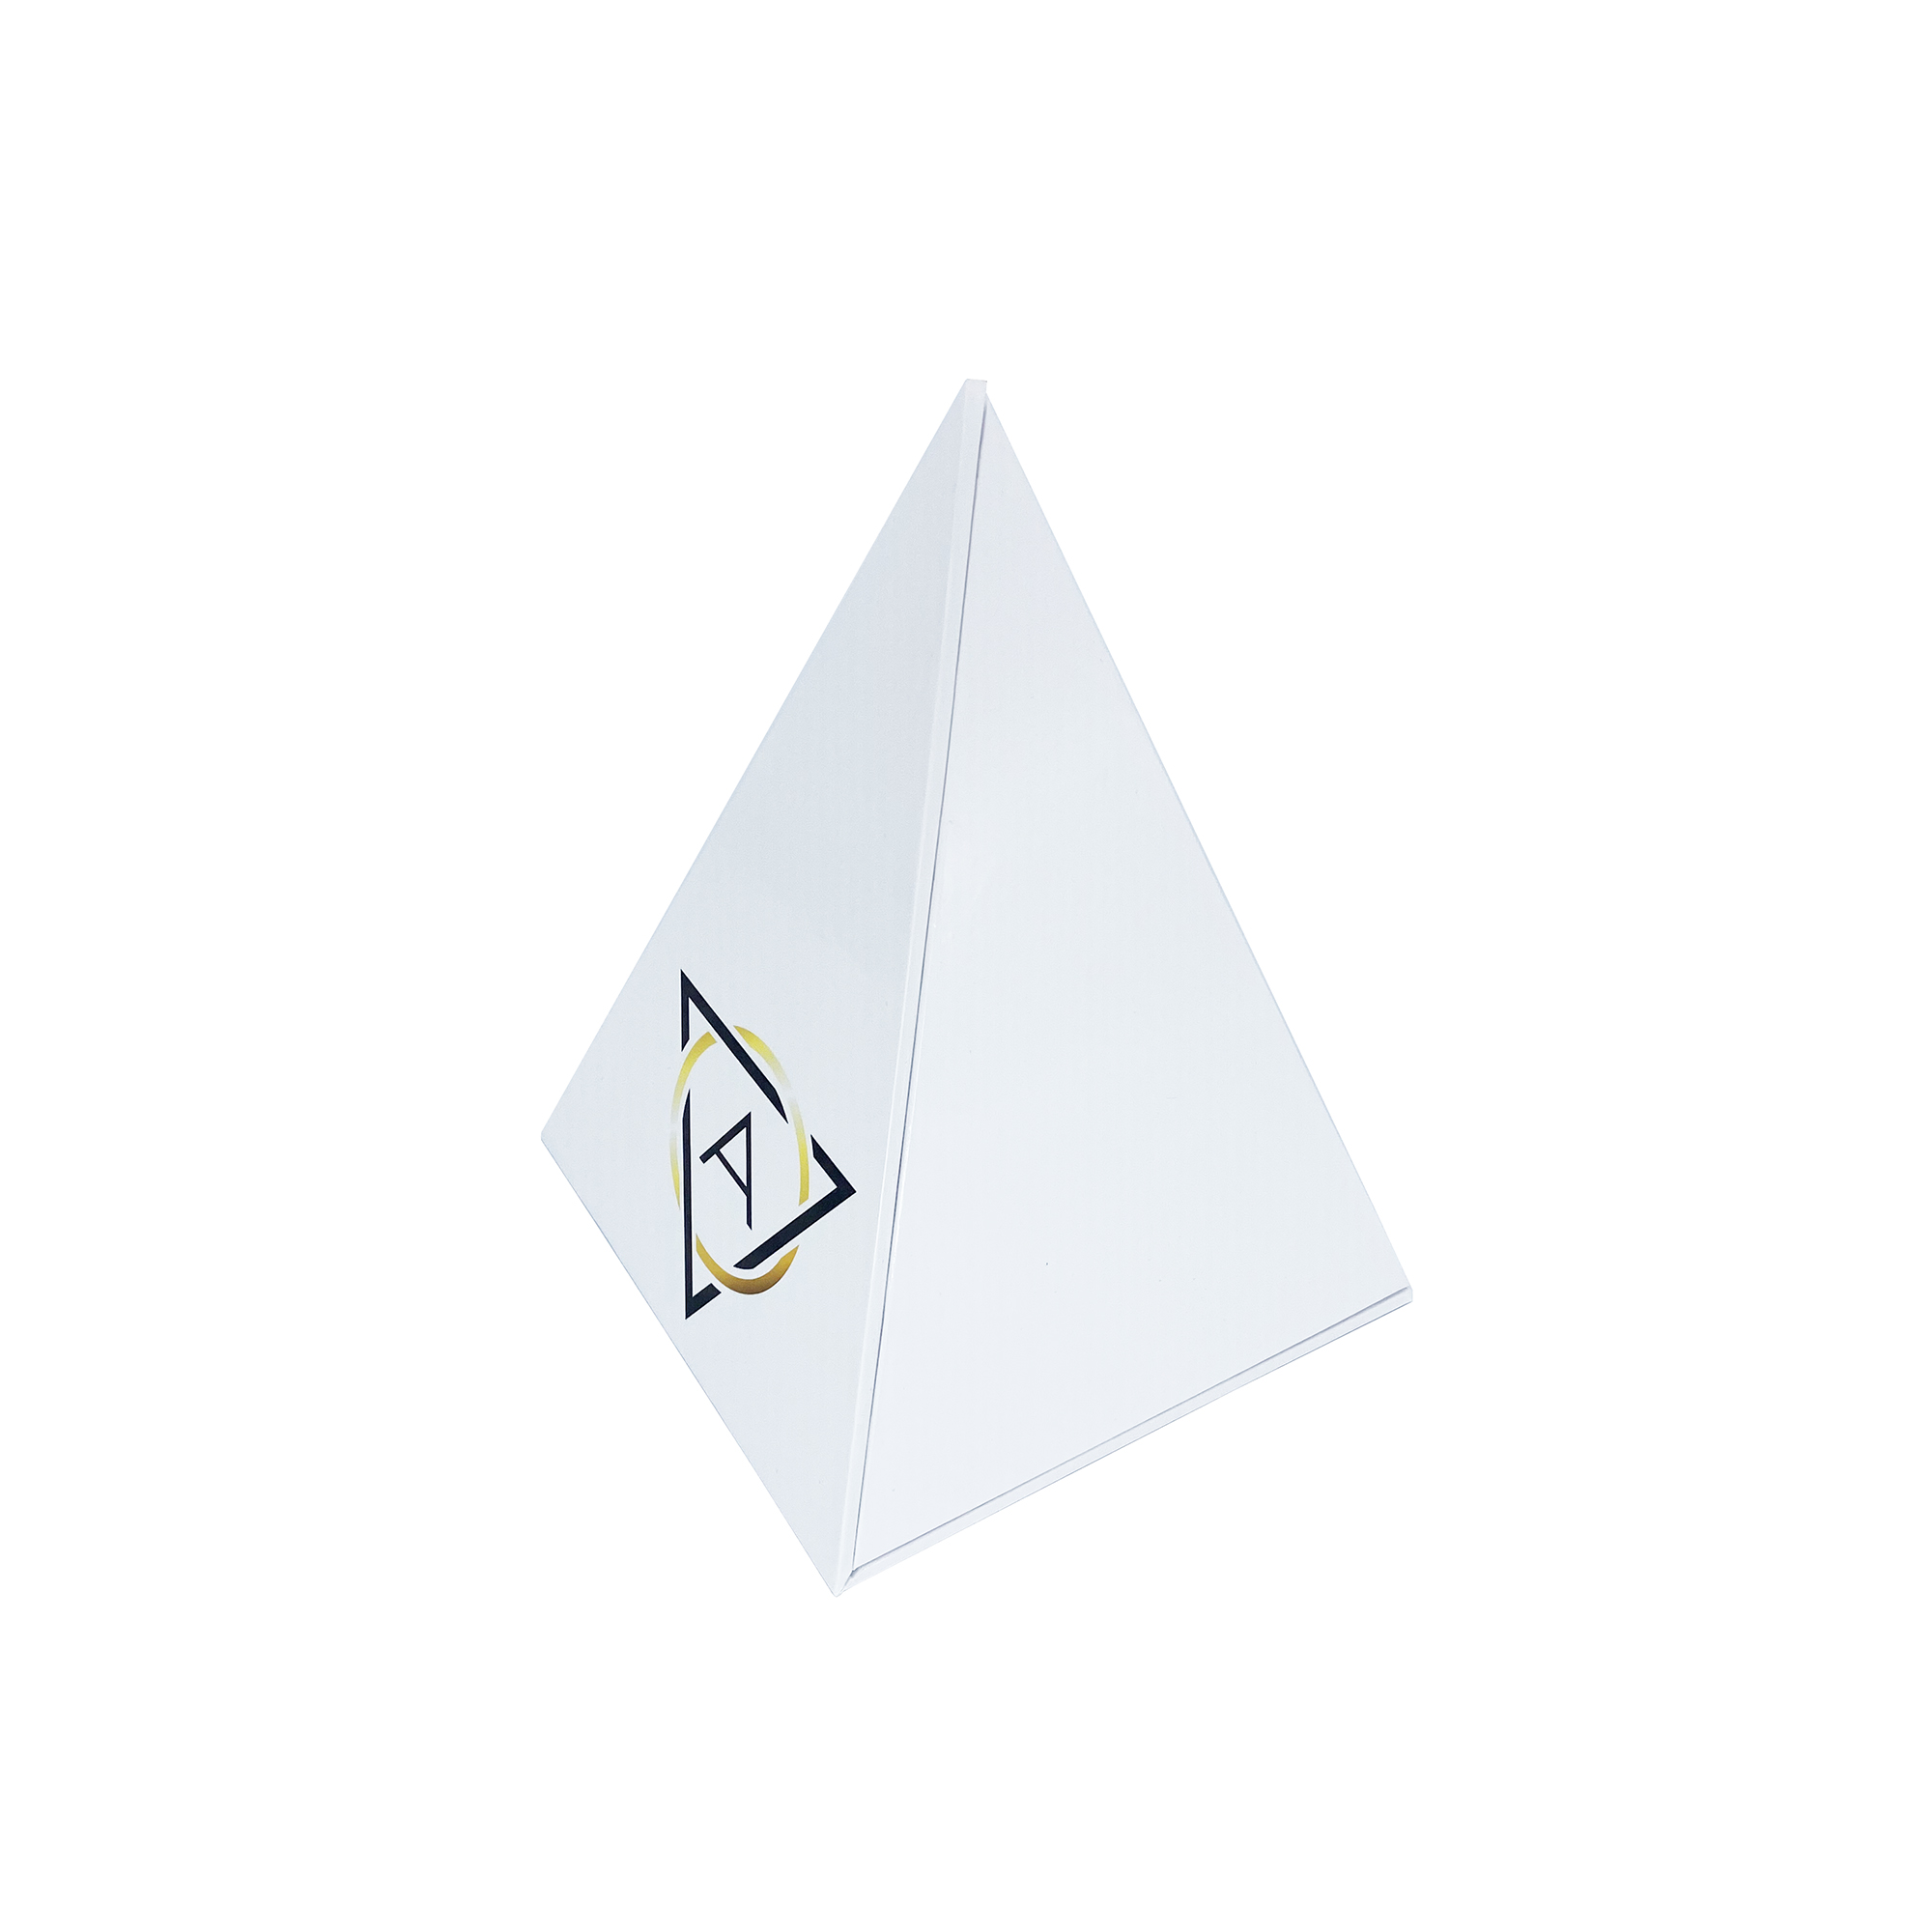 Pyramid Jewelry Box
